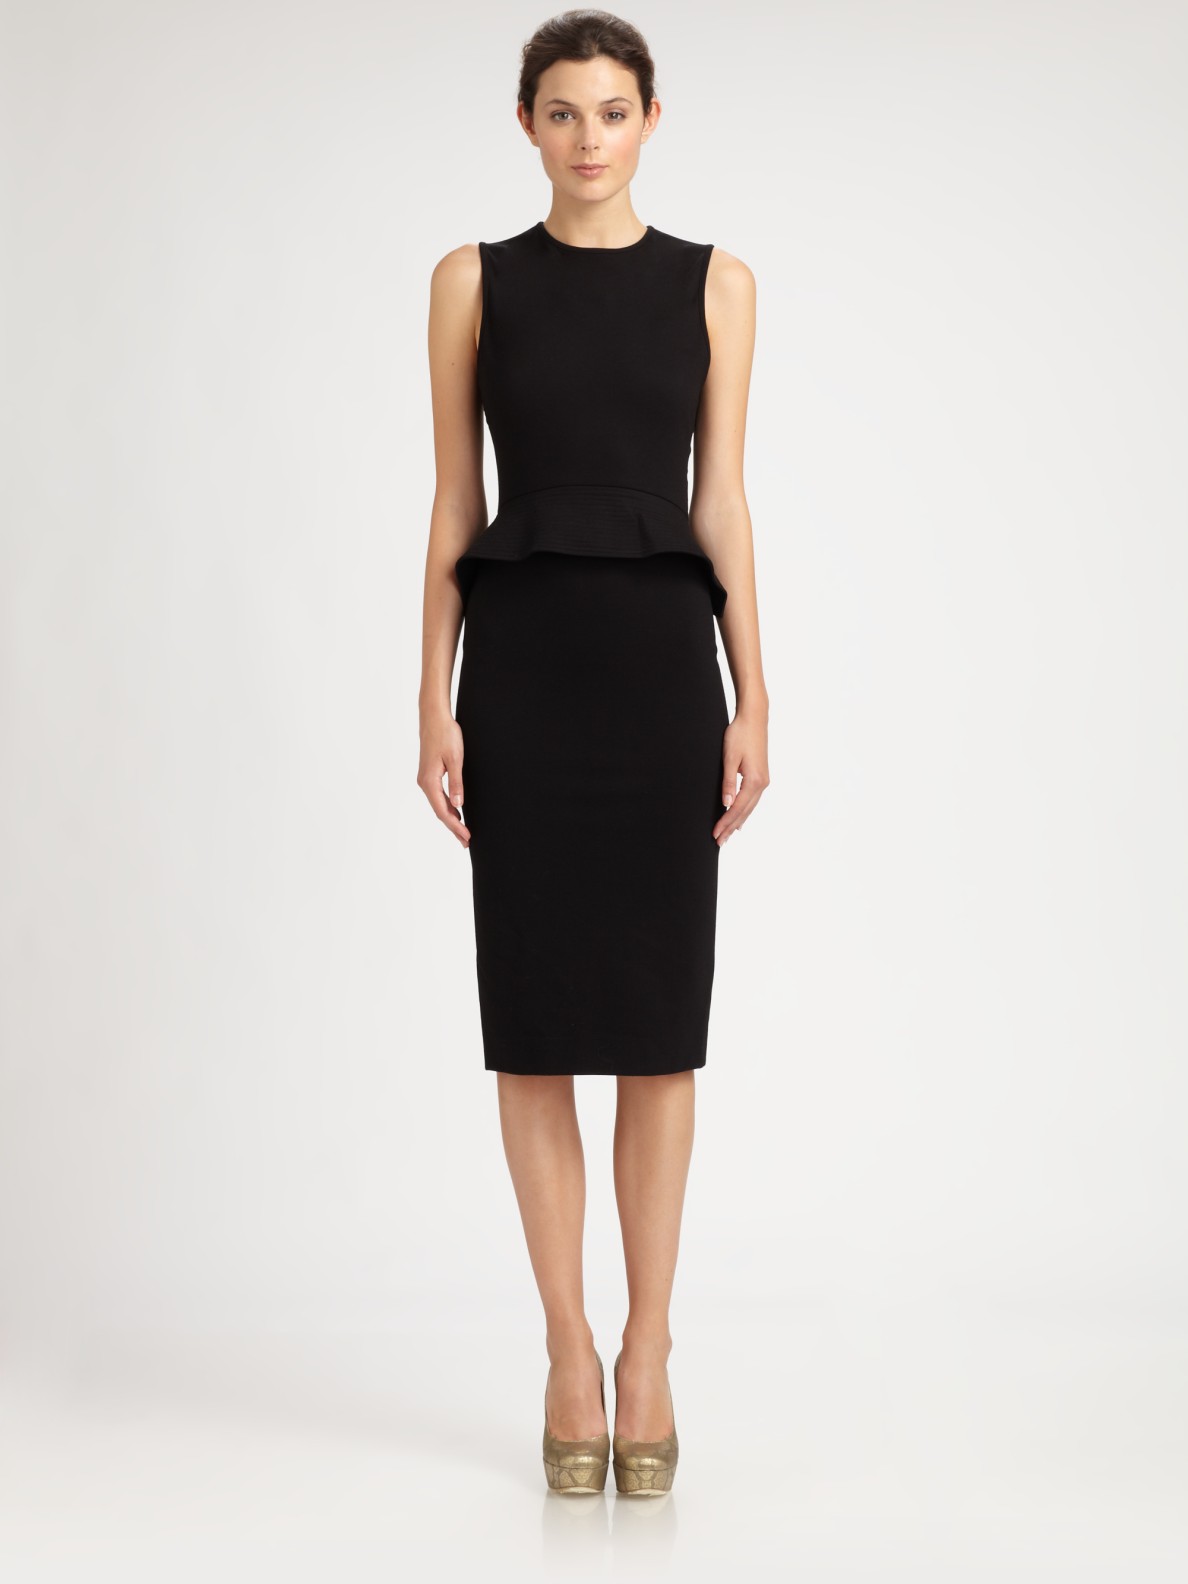 Lyst - Stella Mccartney Sleeveless Peplum Dress in Black